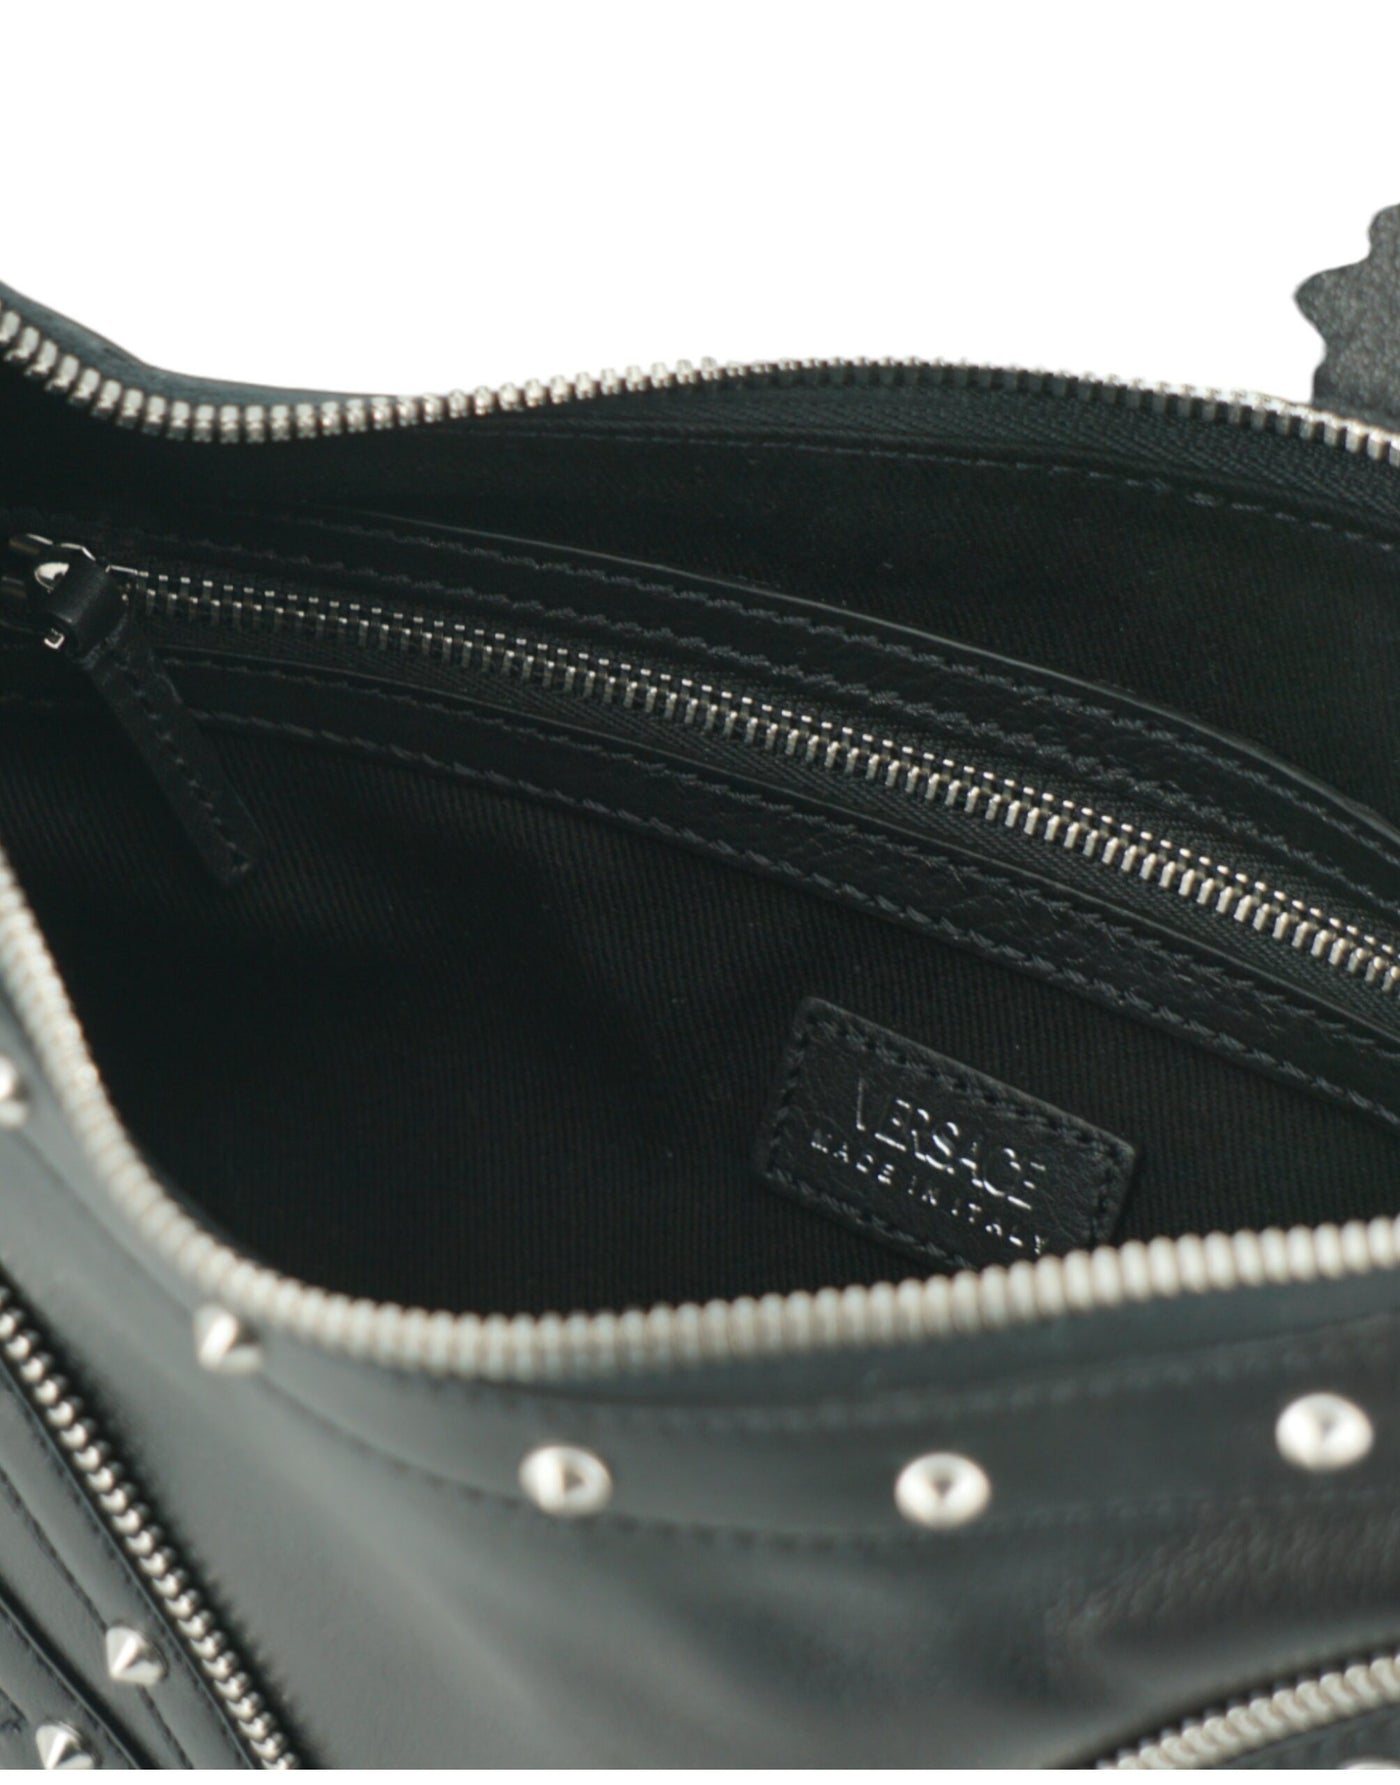 Versace Black Calf Leather Small Hobo Shoulder Bag